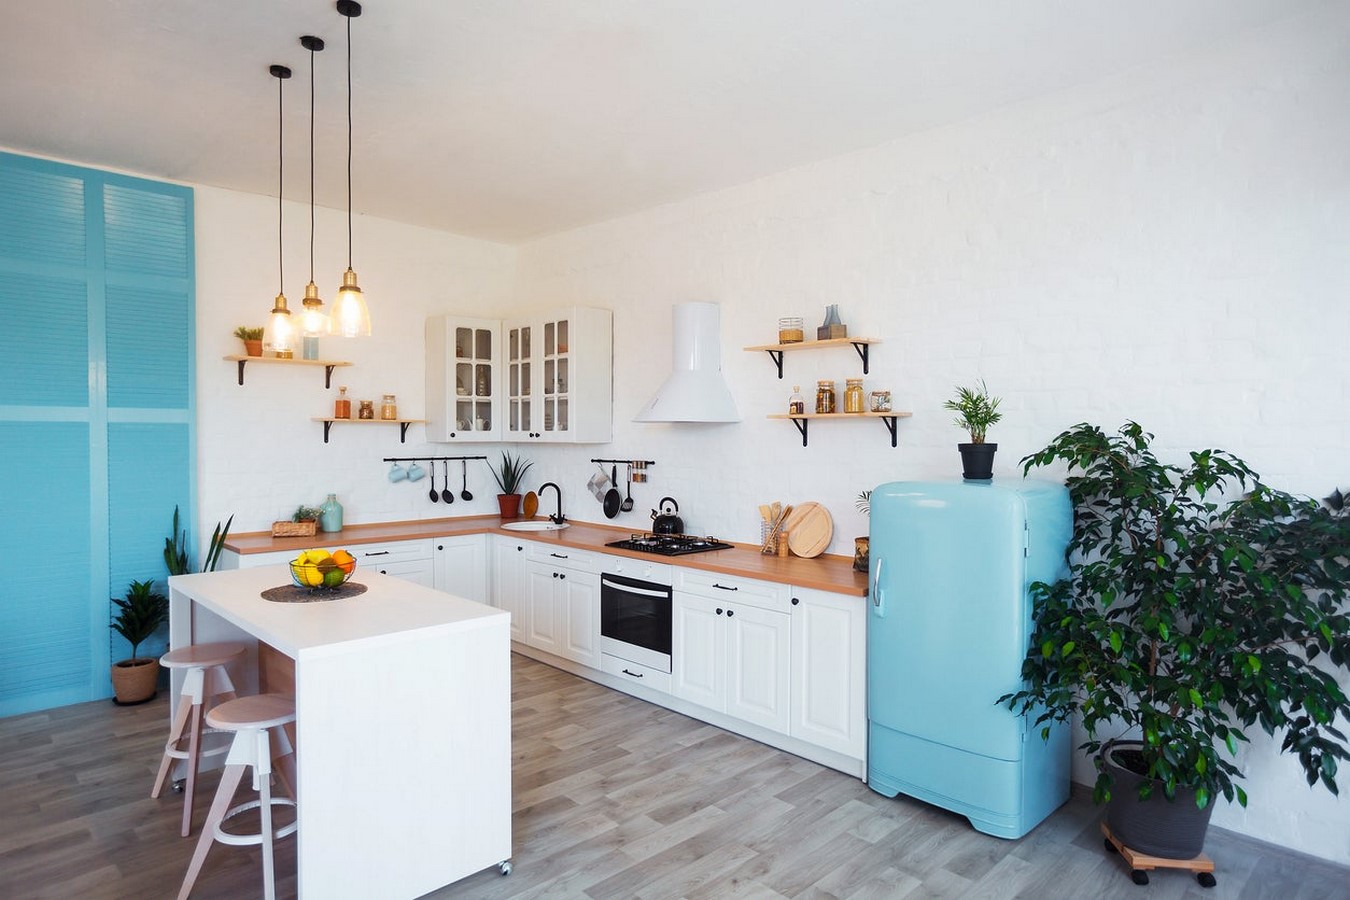 The white kitchen interior_©istockphotos